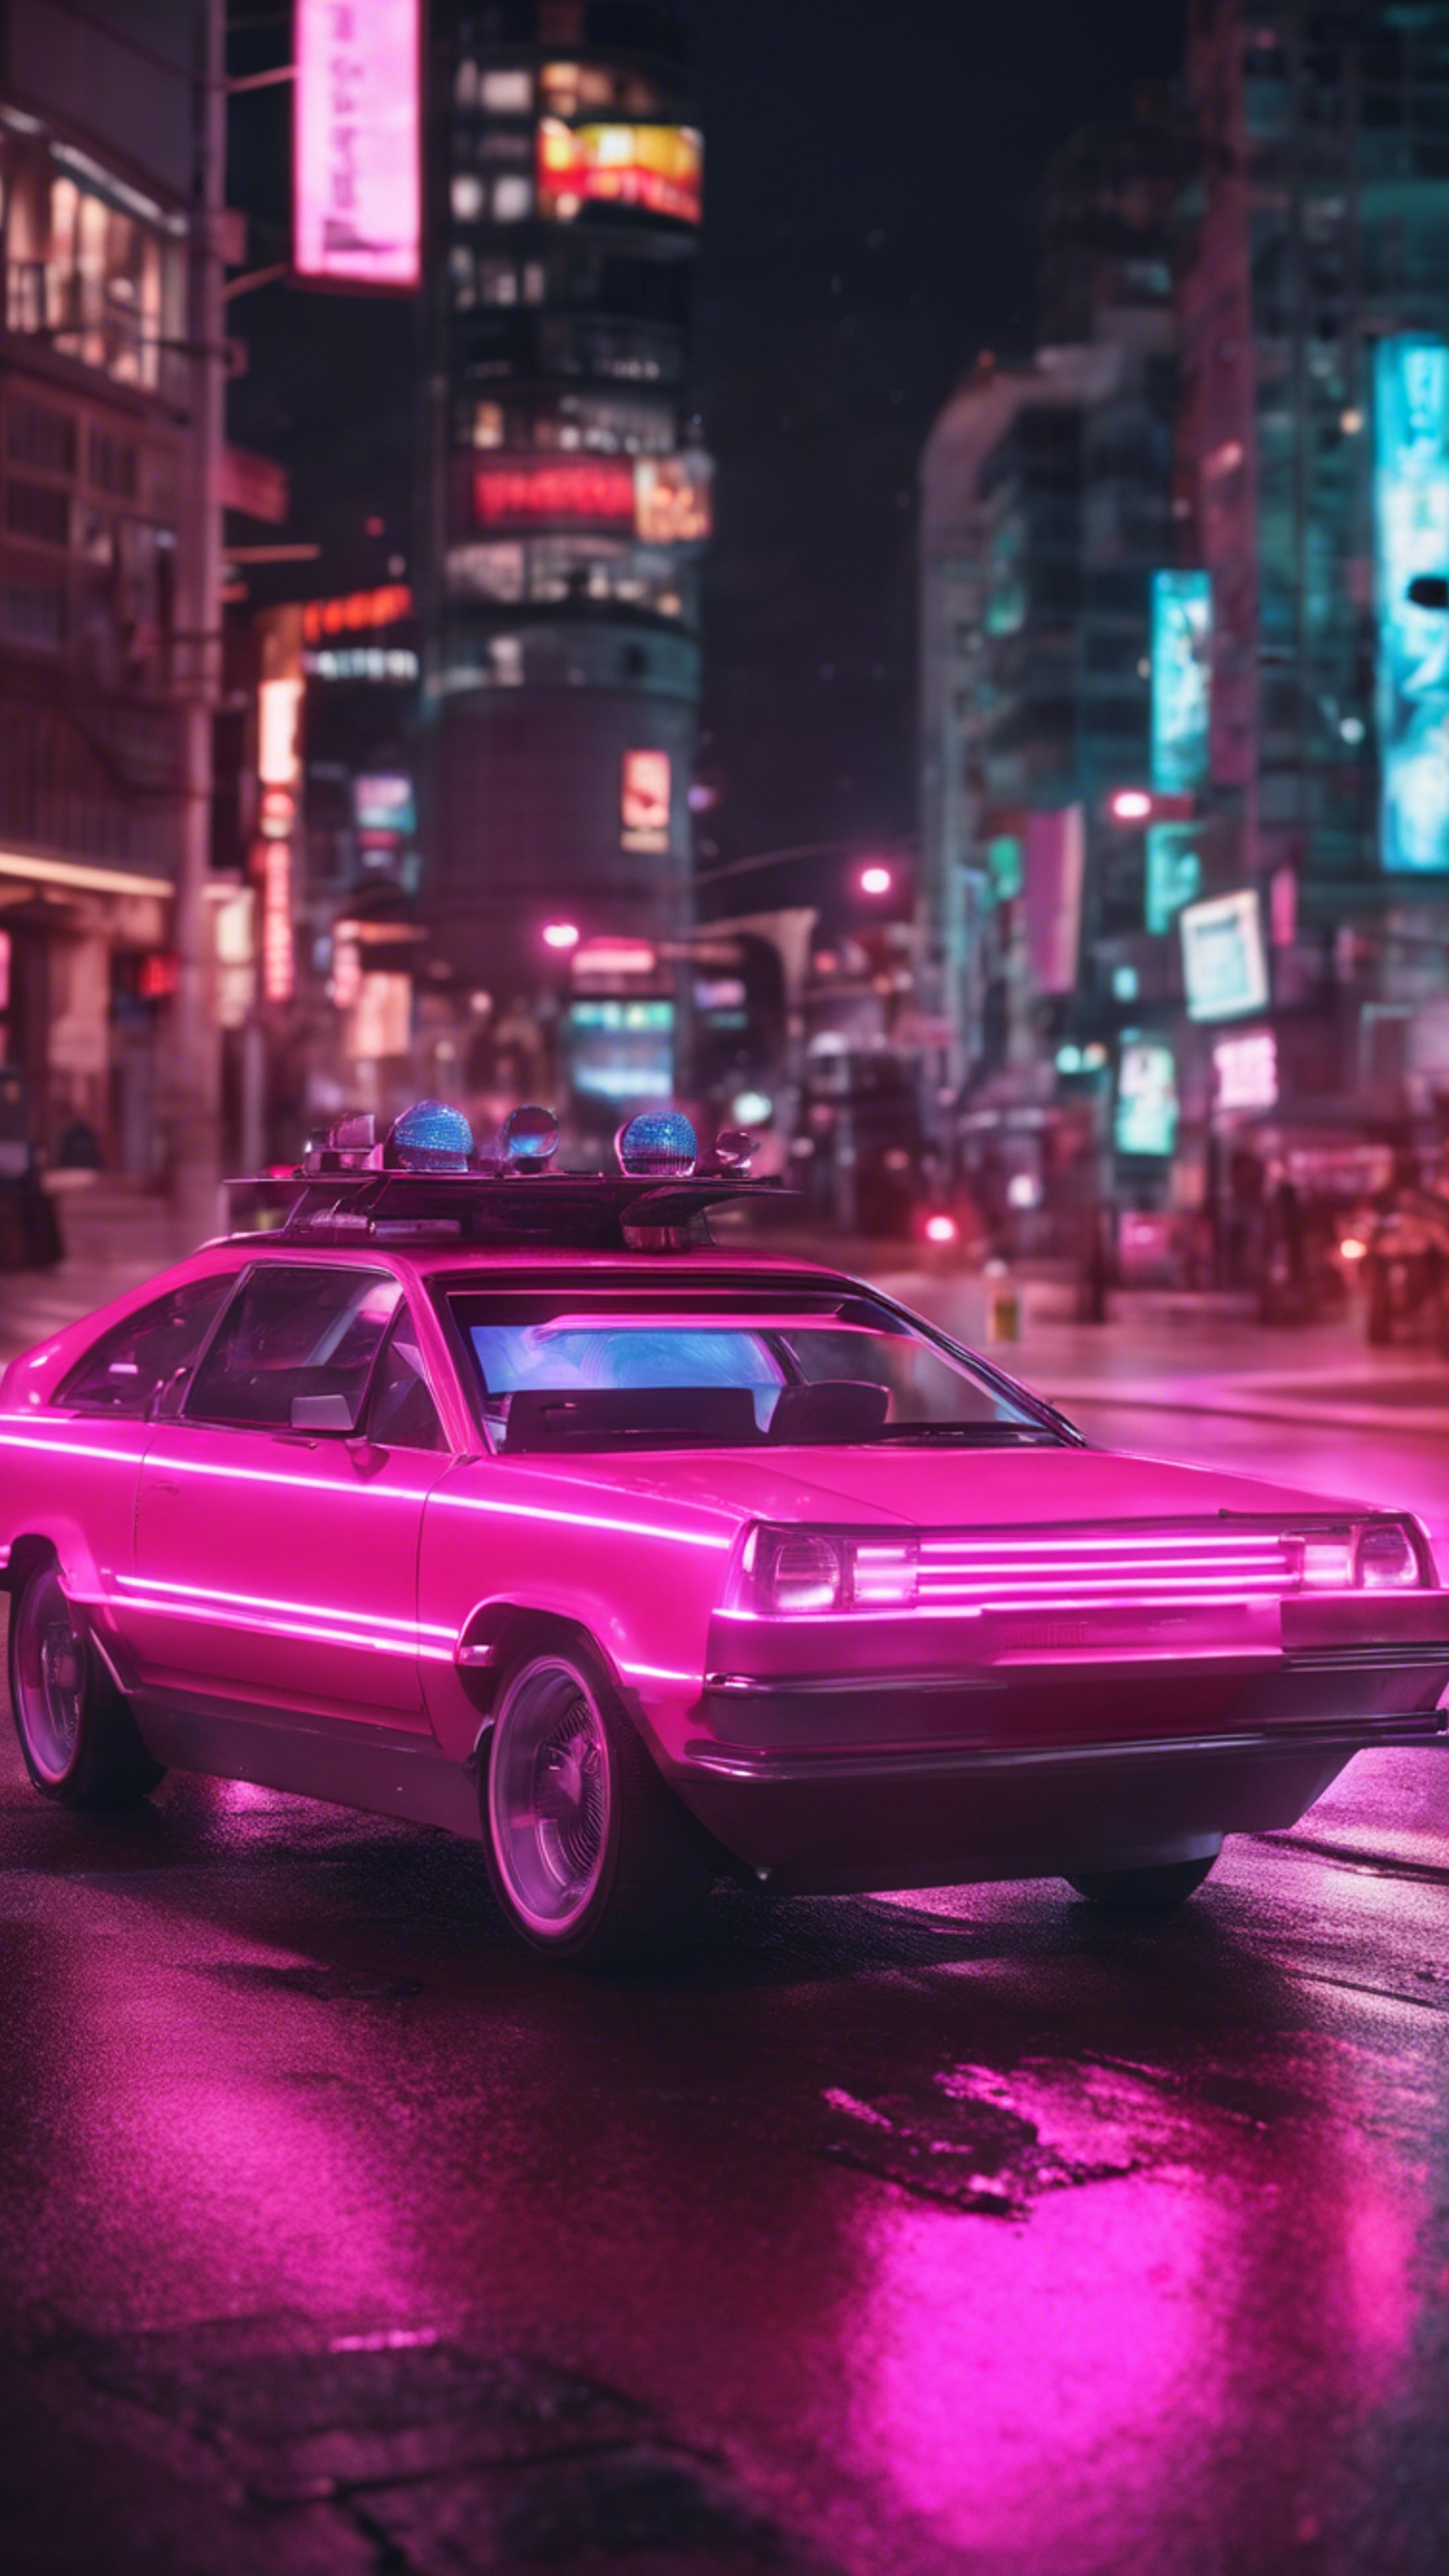 A futuristic neon pink hover car speeding down a city street at night.壁紙[fd9db959ca154b1985e4]